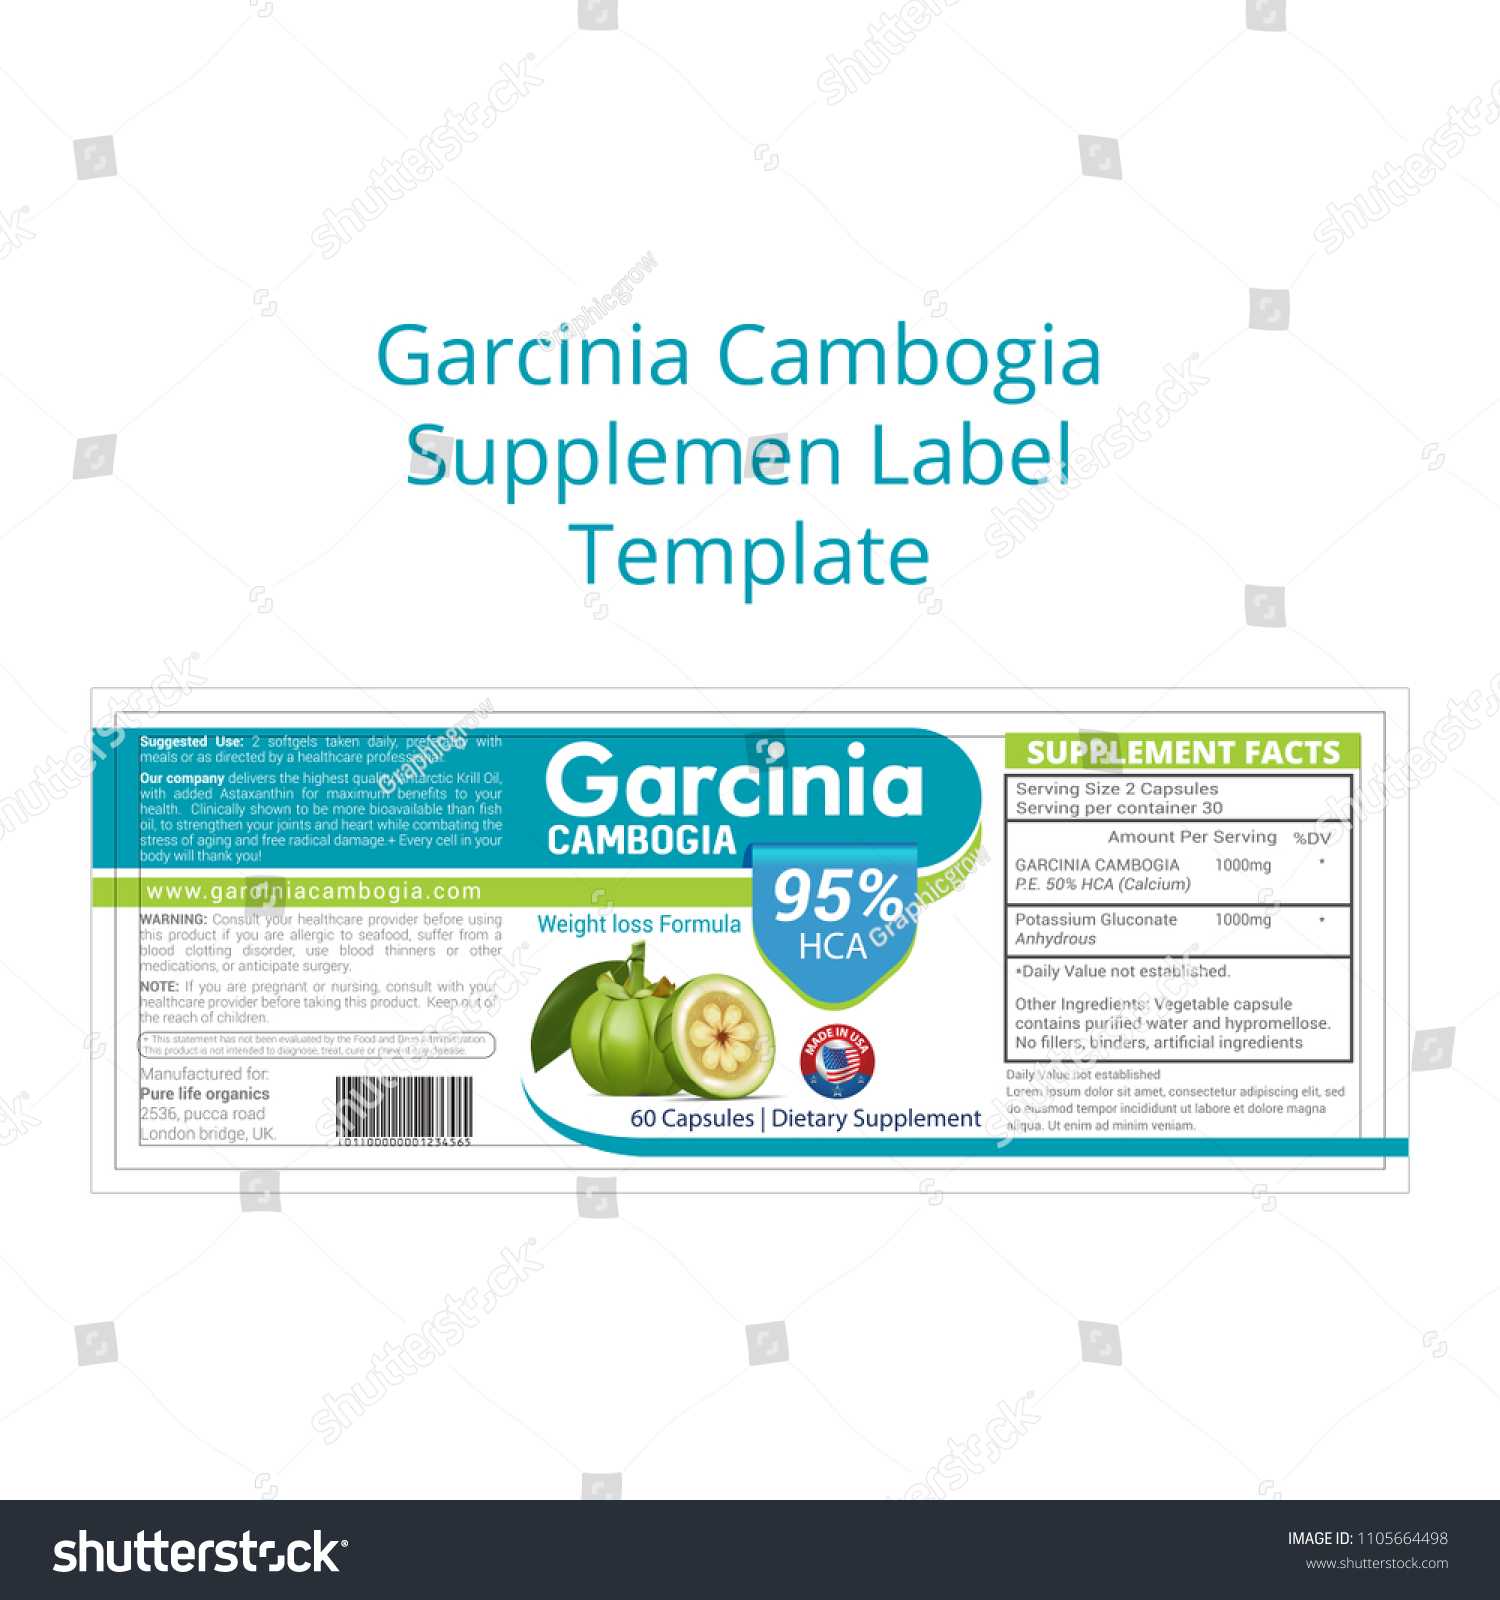 Garcinia Cambogia Supplement Label Template Stock Vector Inside Dietary Supplement Label Template